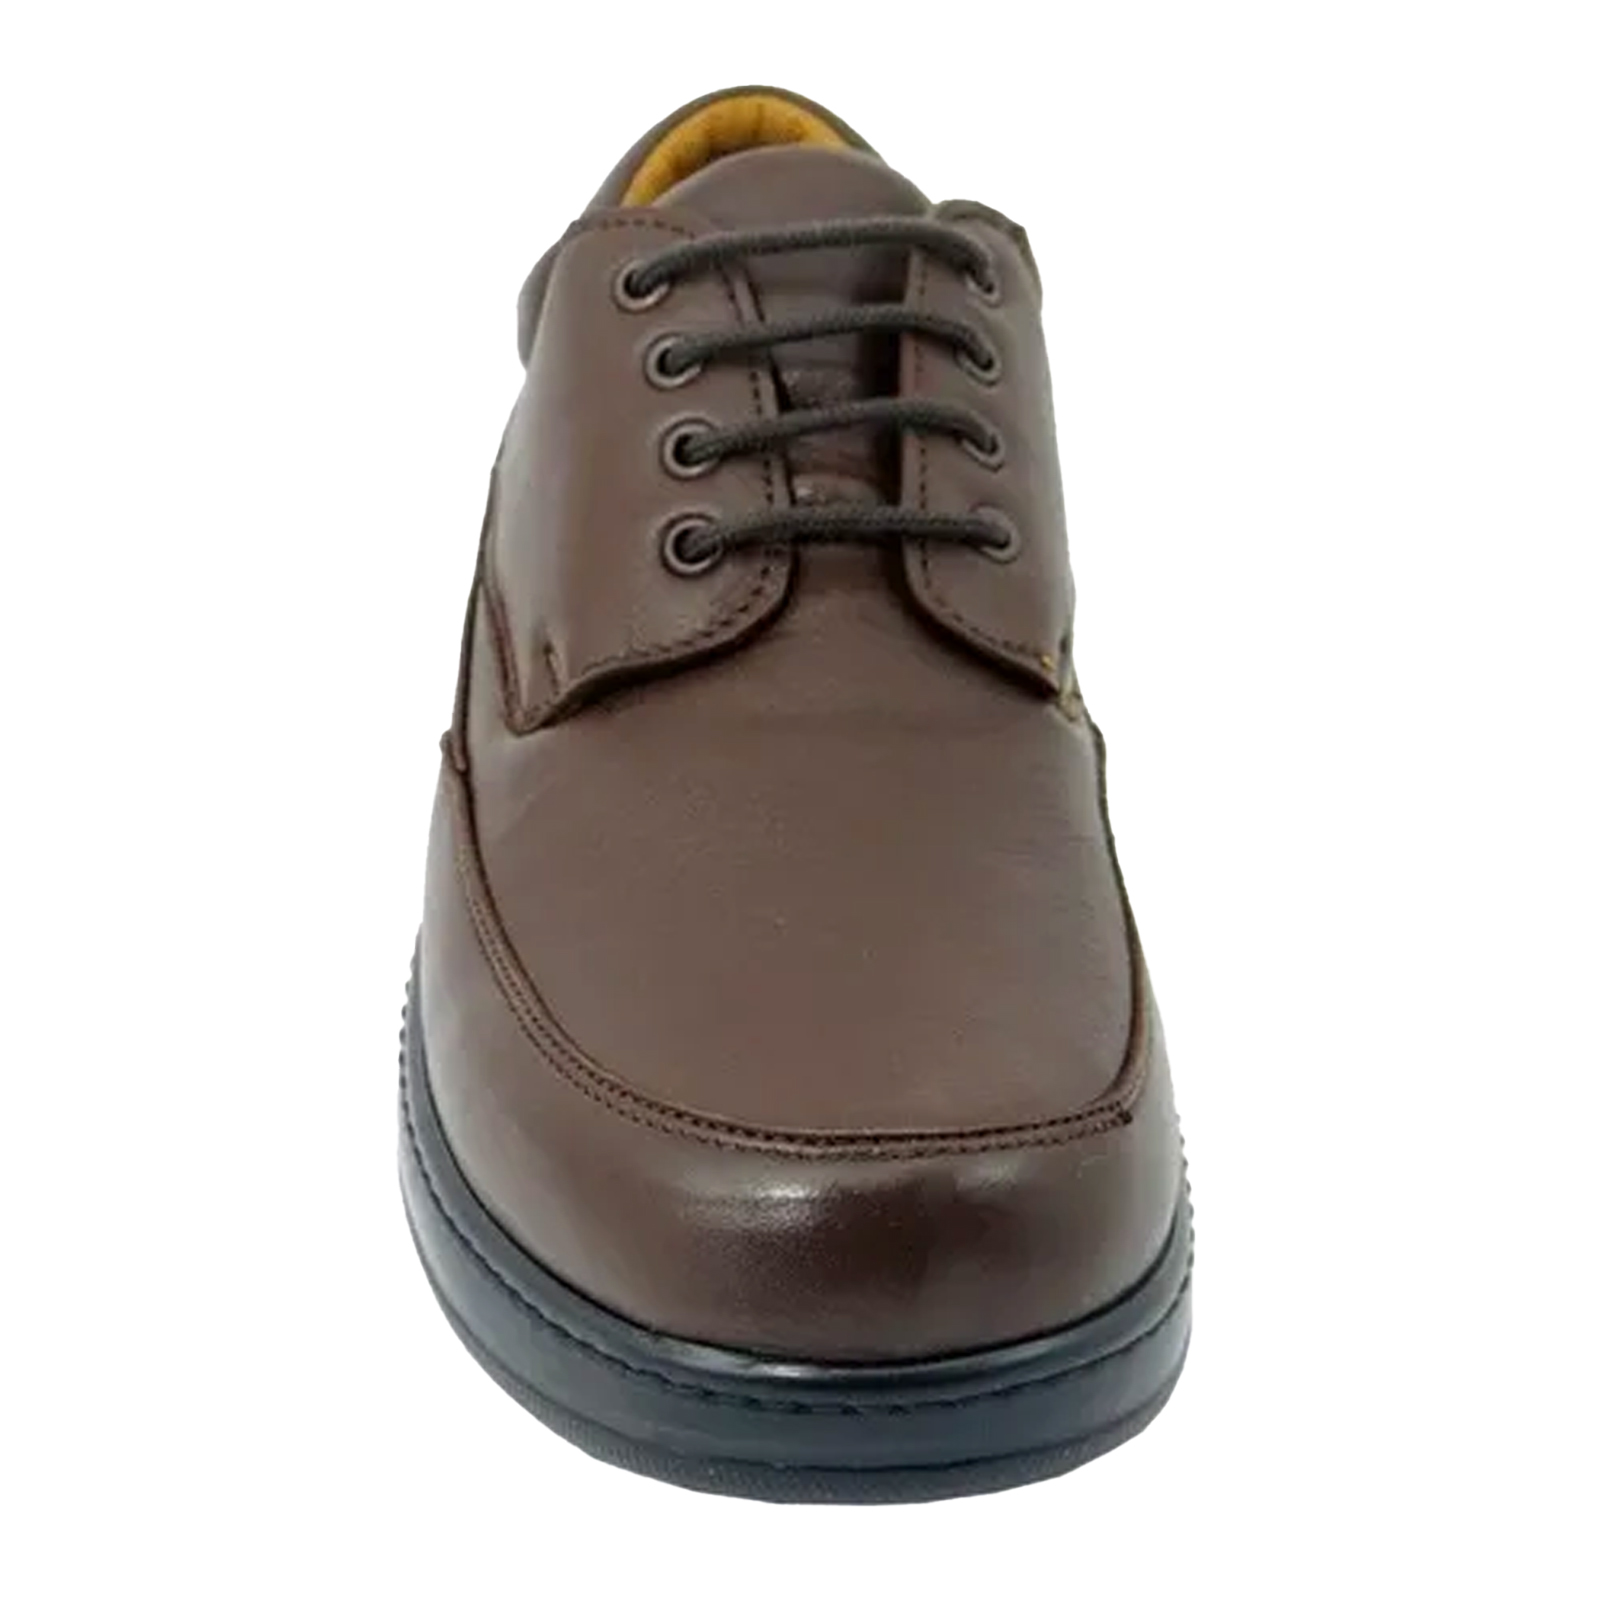 Zapatos Descalzos - Hombre - Piel Natural - Arena - Las Zapatillas Retro –  Origo Shoes